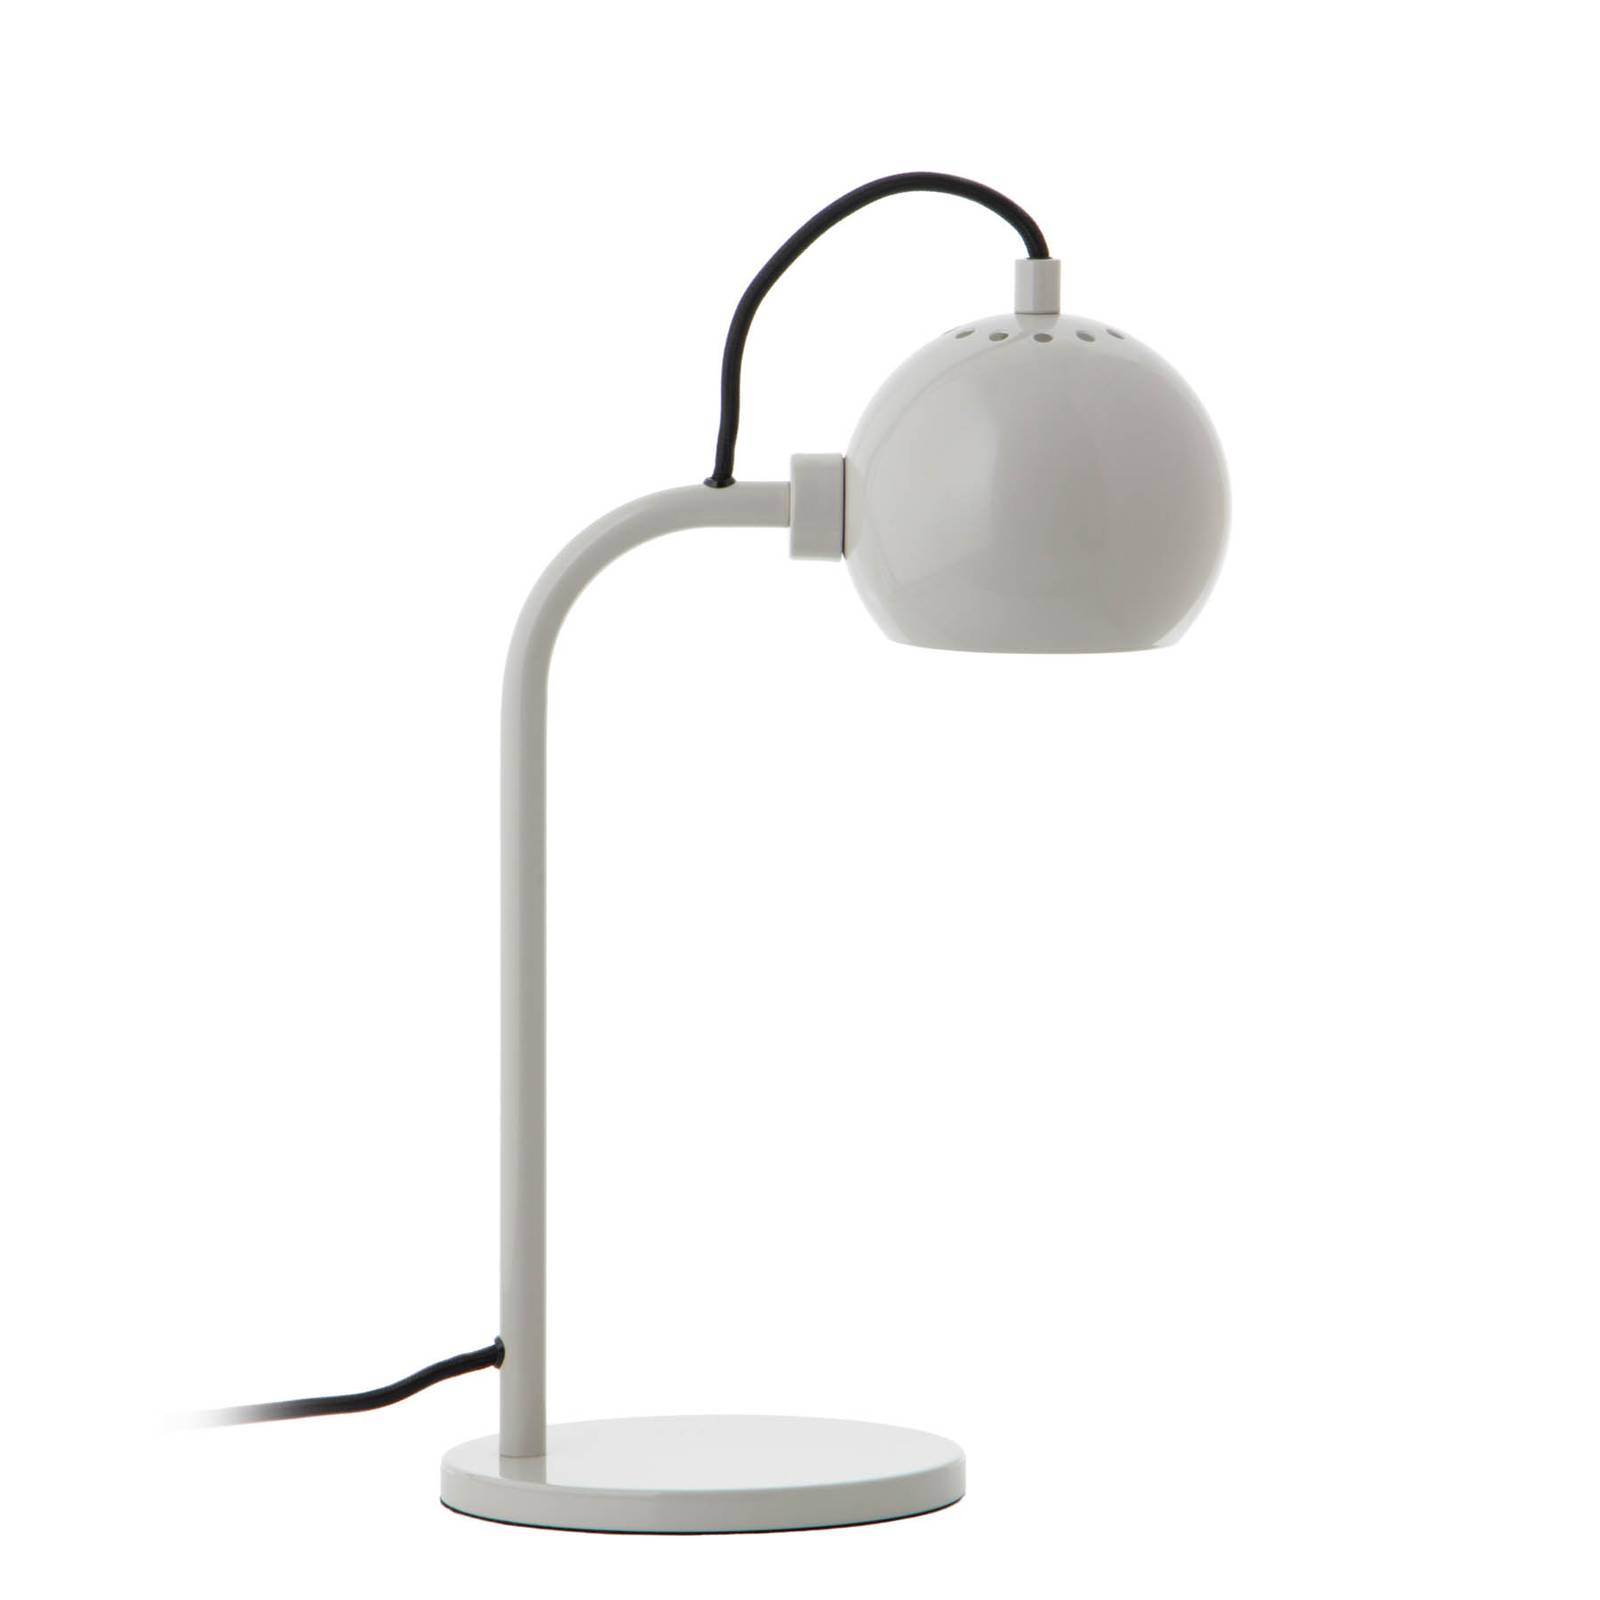 Image of FRANDSEN Ball Single lampe à poser, gris claie 5702410447660